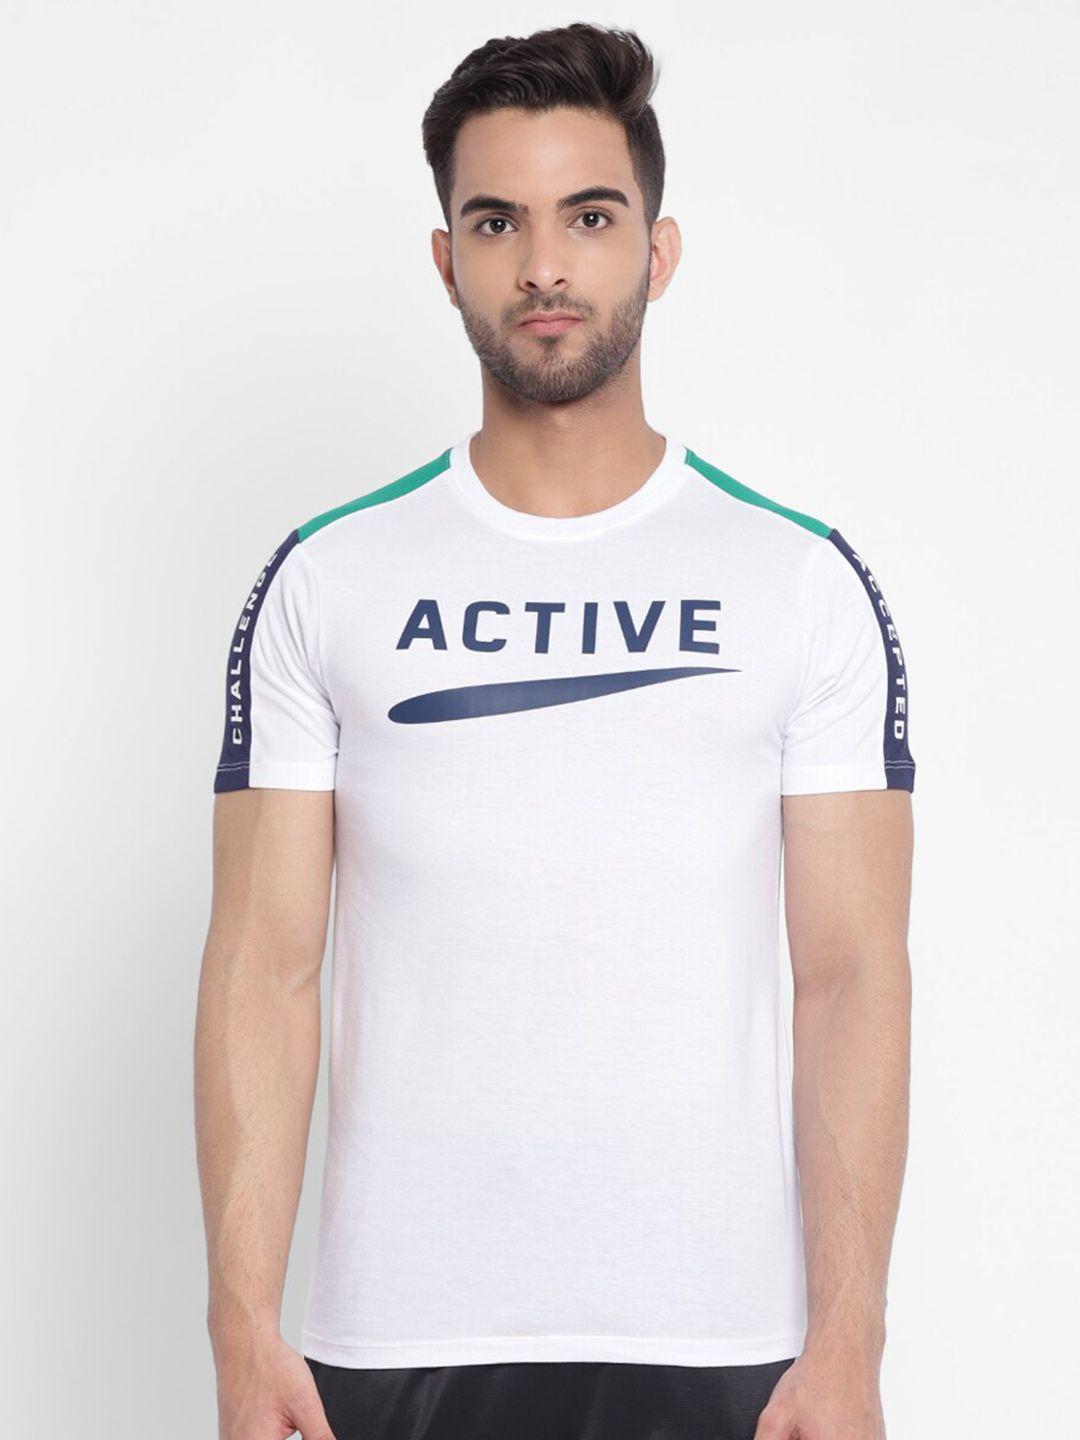 yuuki typography printed raglan sleeves antimicrobial cotton sports t-shirt